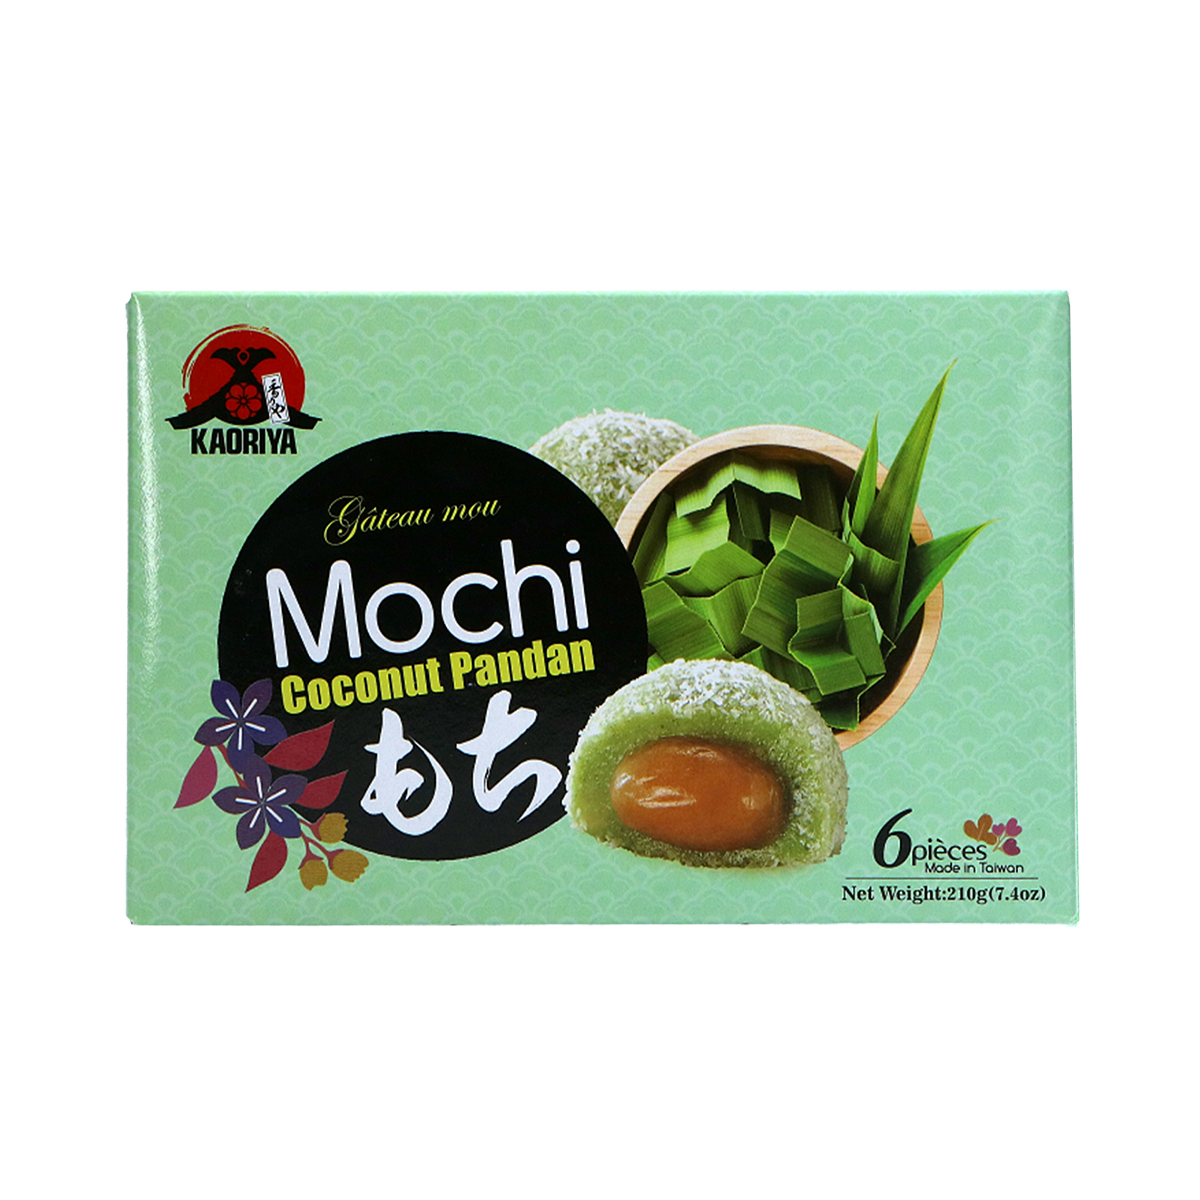 Dulciuri - Mochi cu pandan si cocos KAORIYA 210g, asianfood.ro